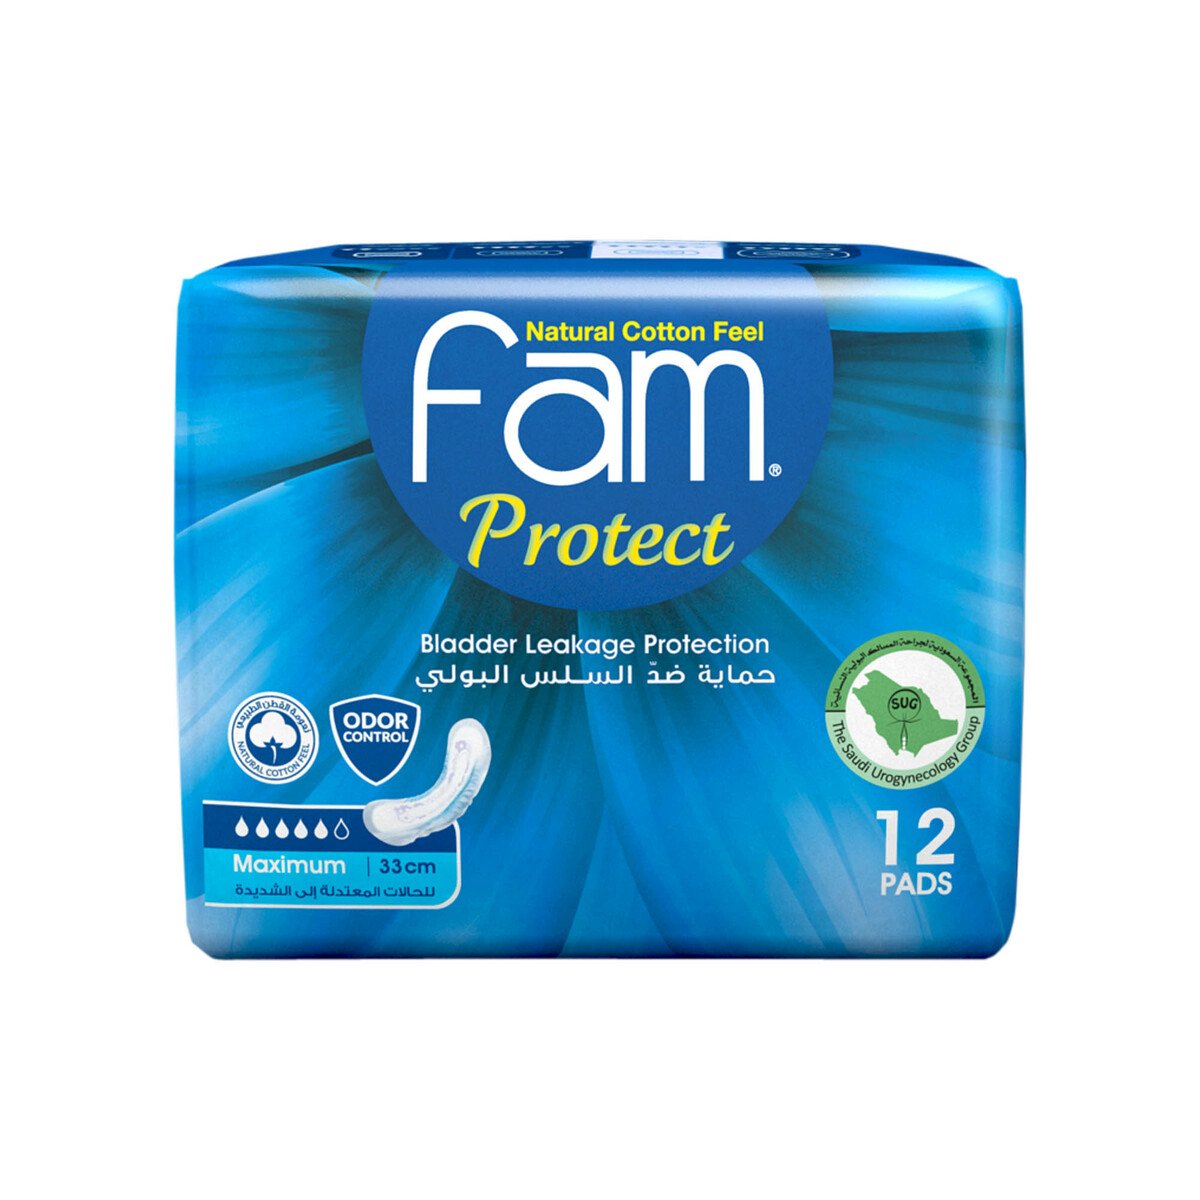 Fam Pads Bladder Leakage Protection Maximum Size 33cm 12pcs